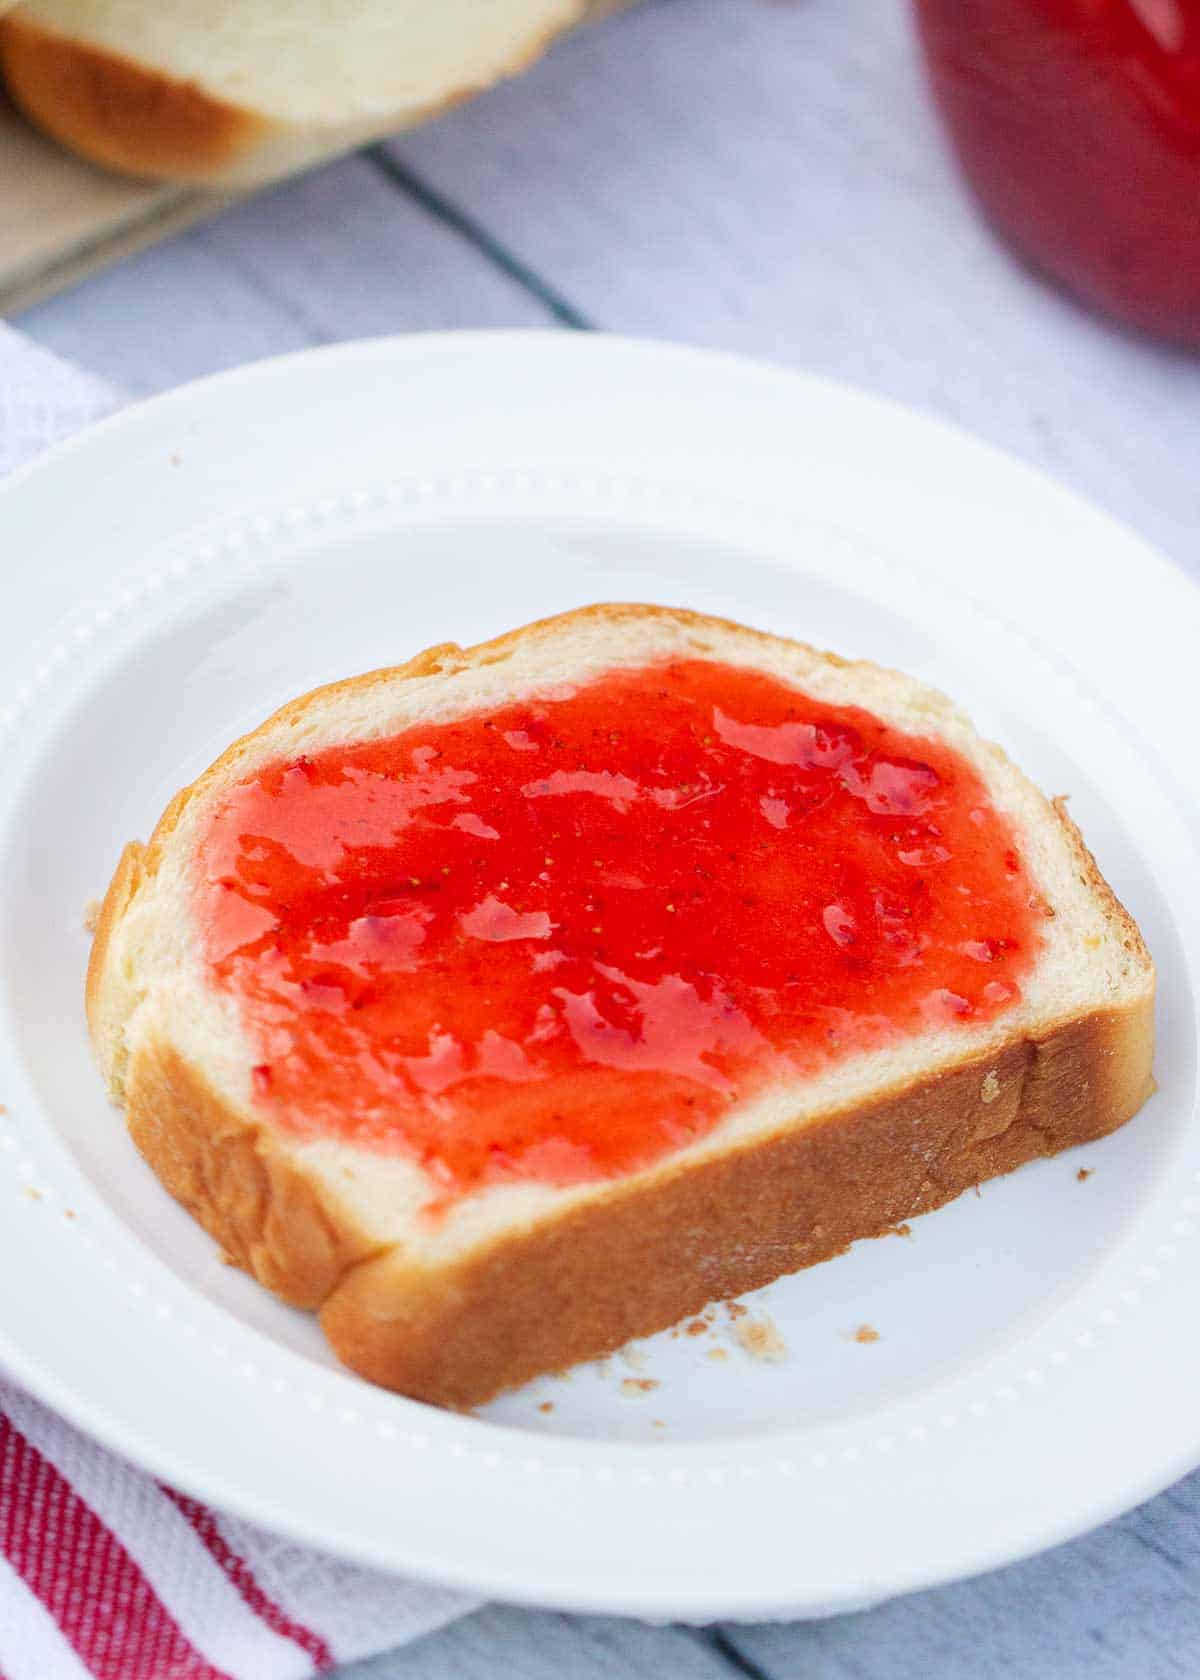 Strawberry jam on homemade bread.